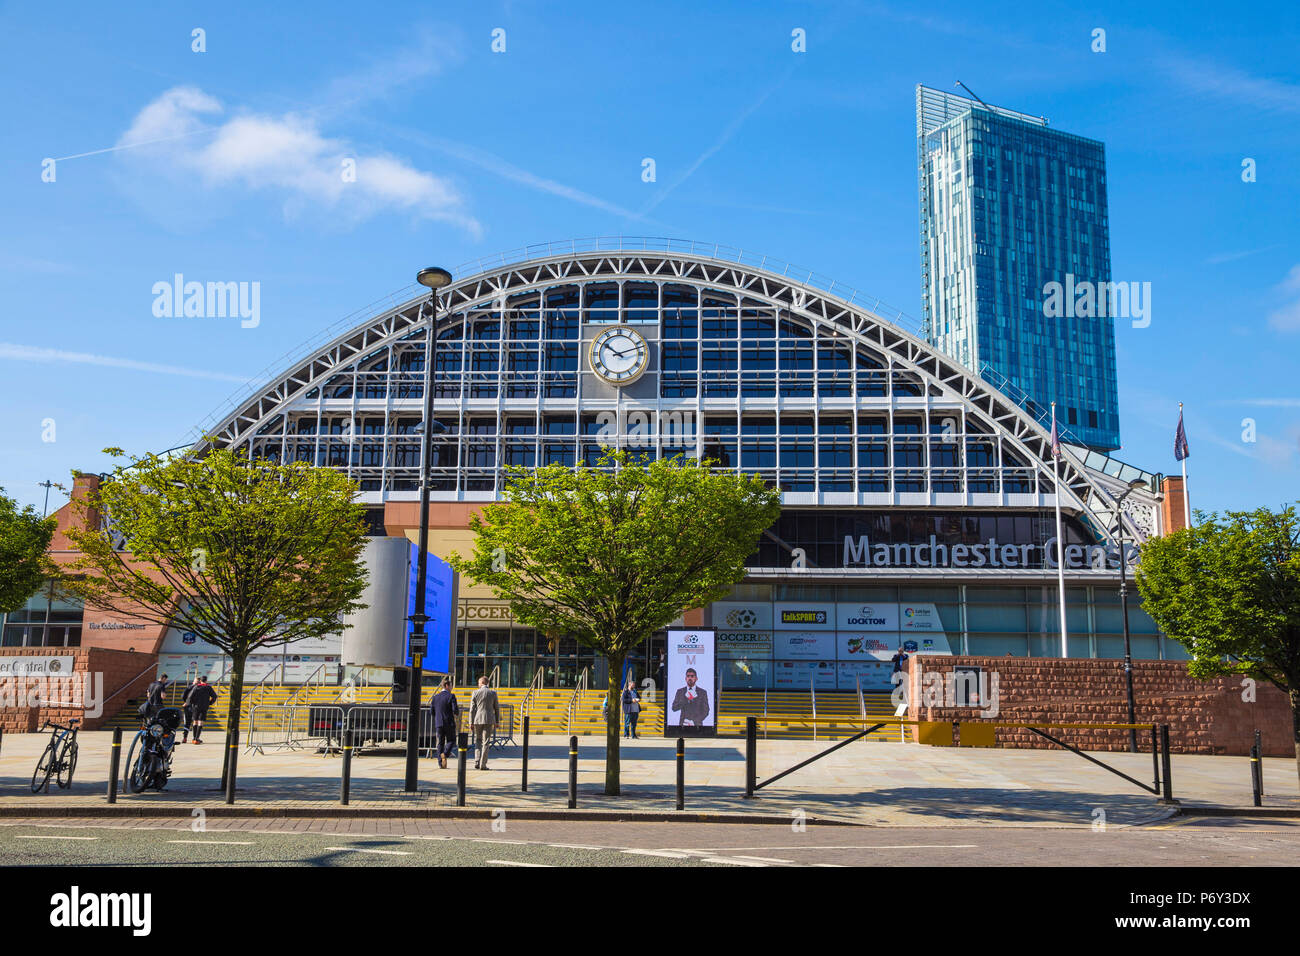 Inglaterra, Manchester, del centro de convenciones de Manchester Central, conocida como Manchester Central Foto de stock